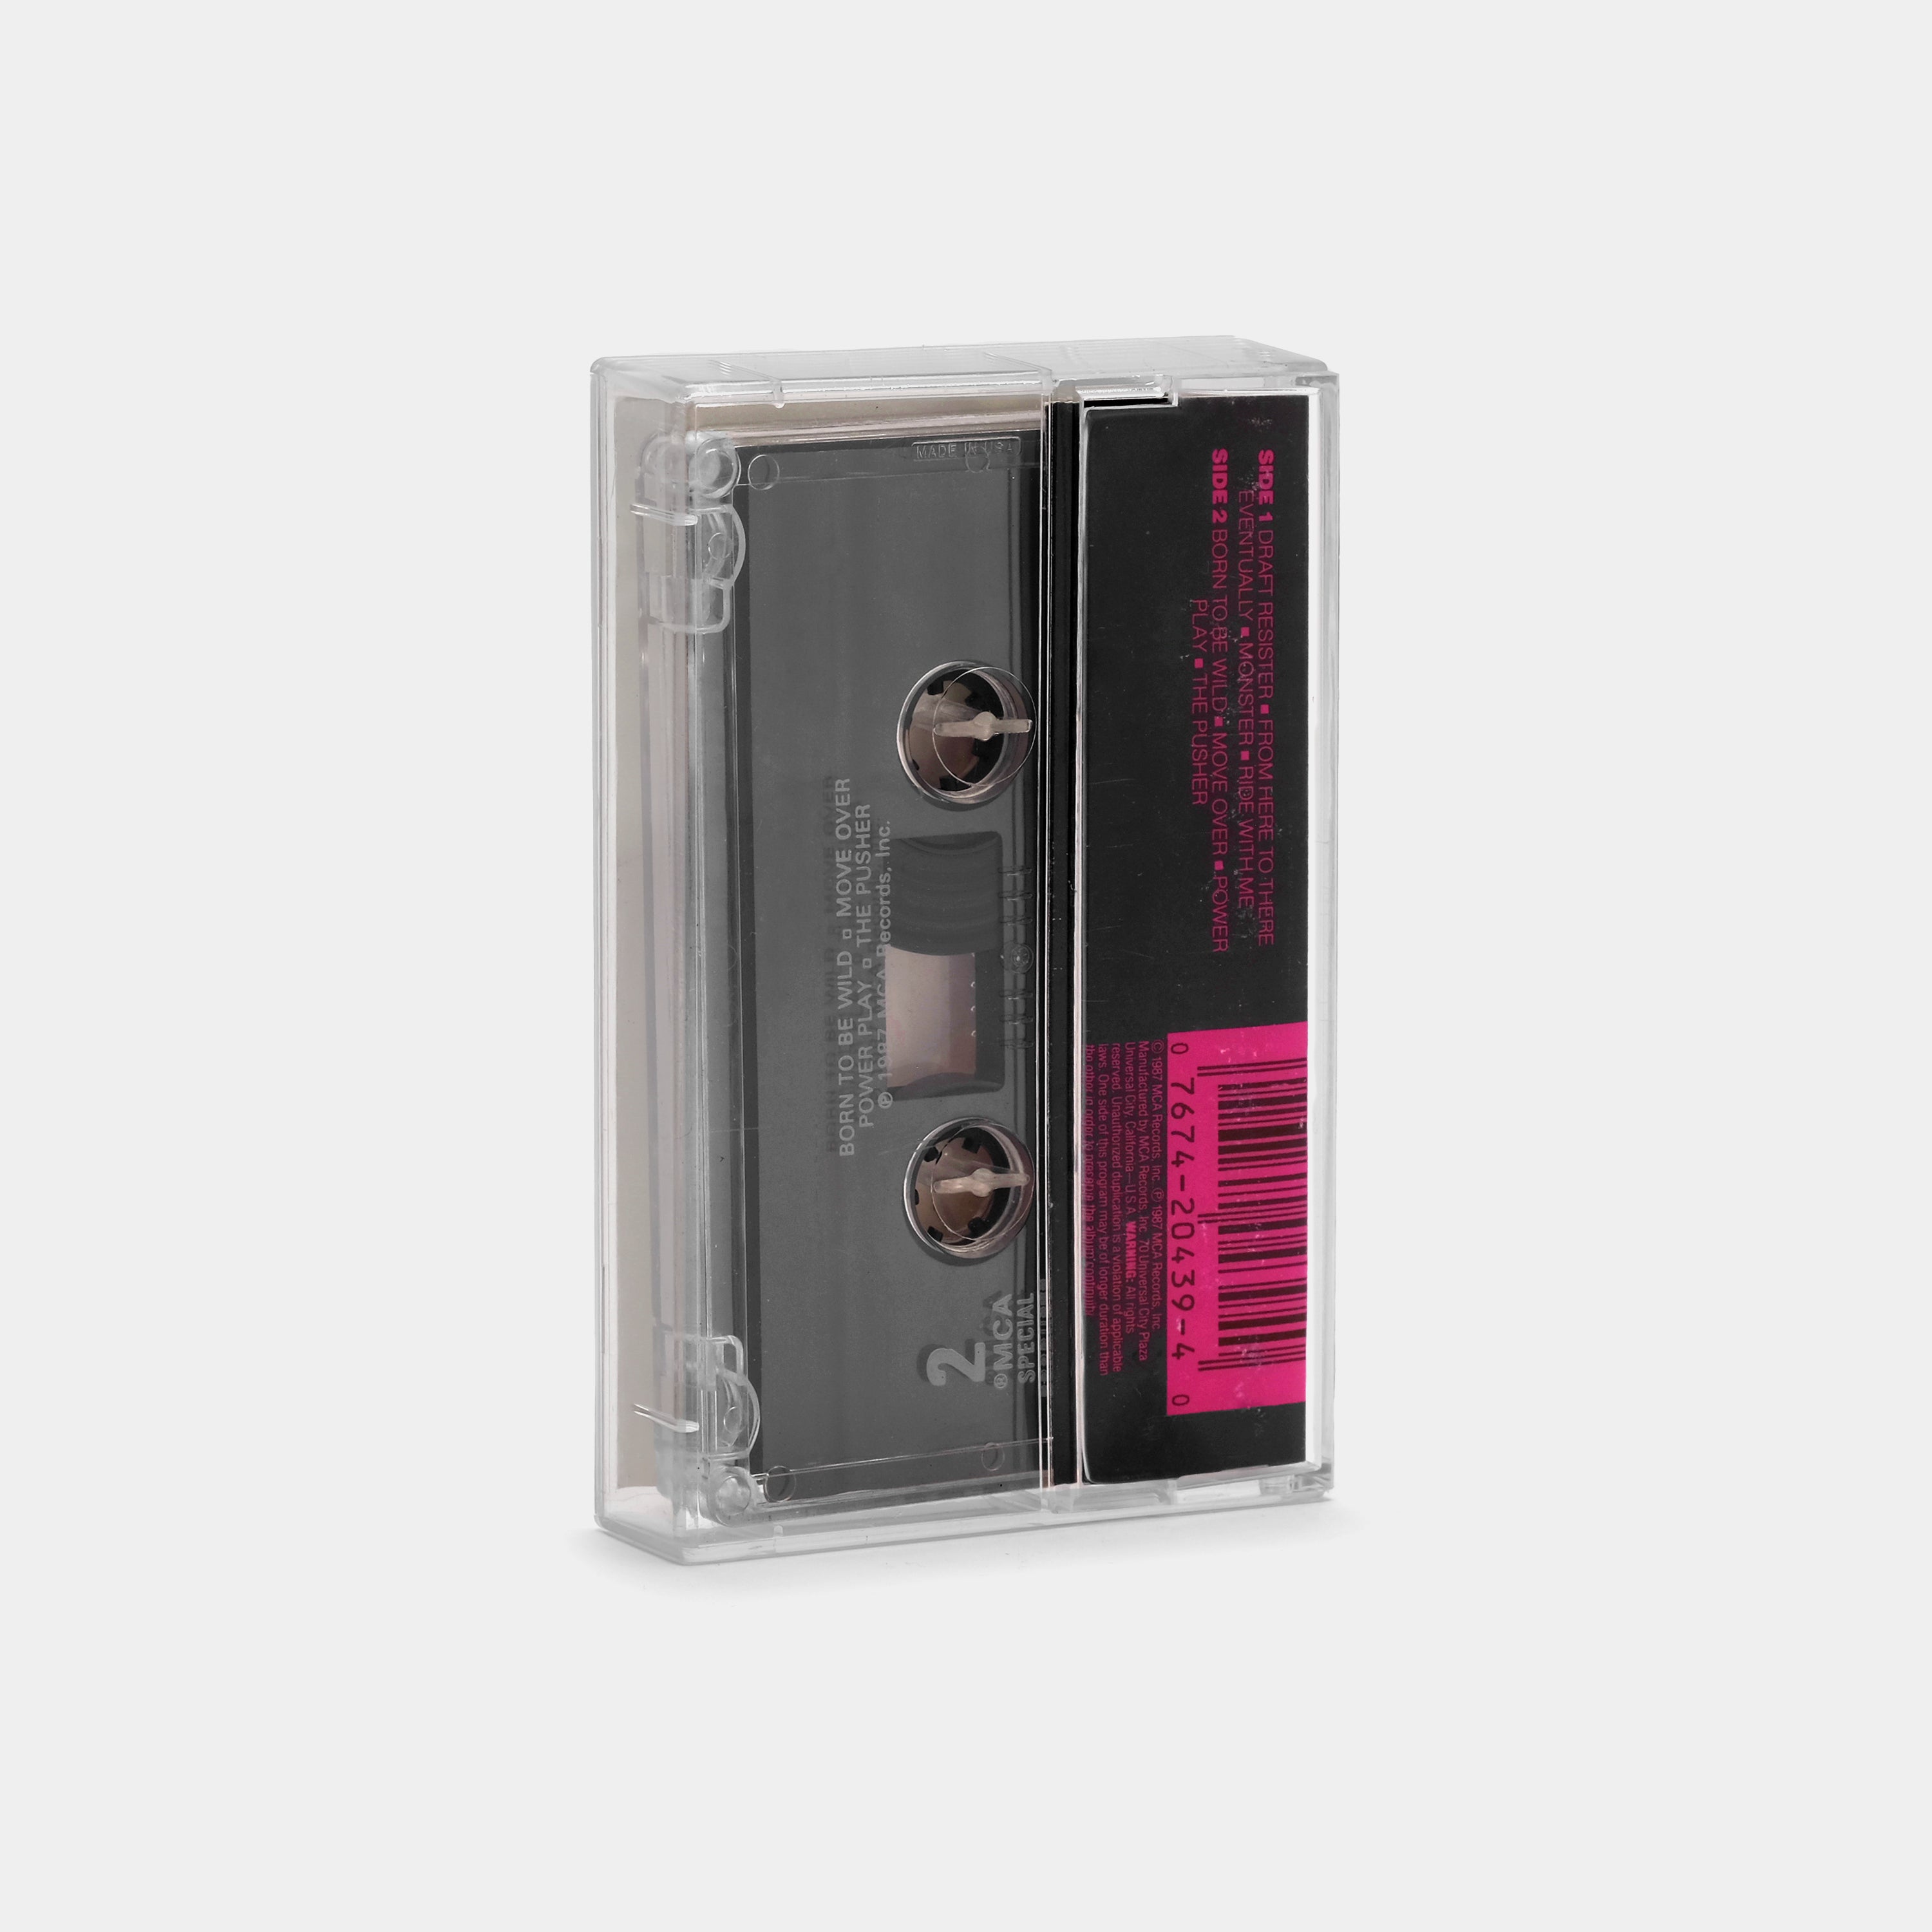 Steppenwolf - Best Of Vol. II Cassette Tape